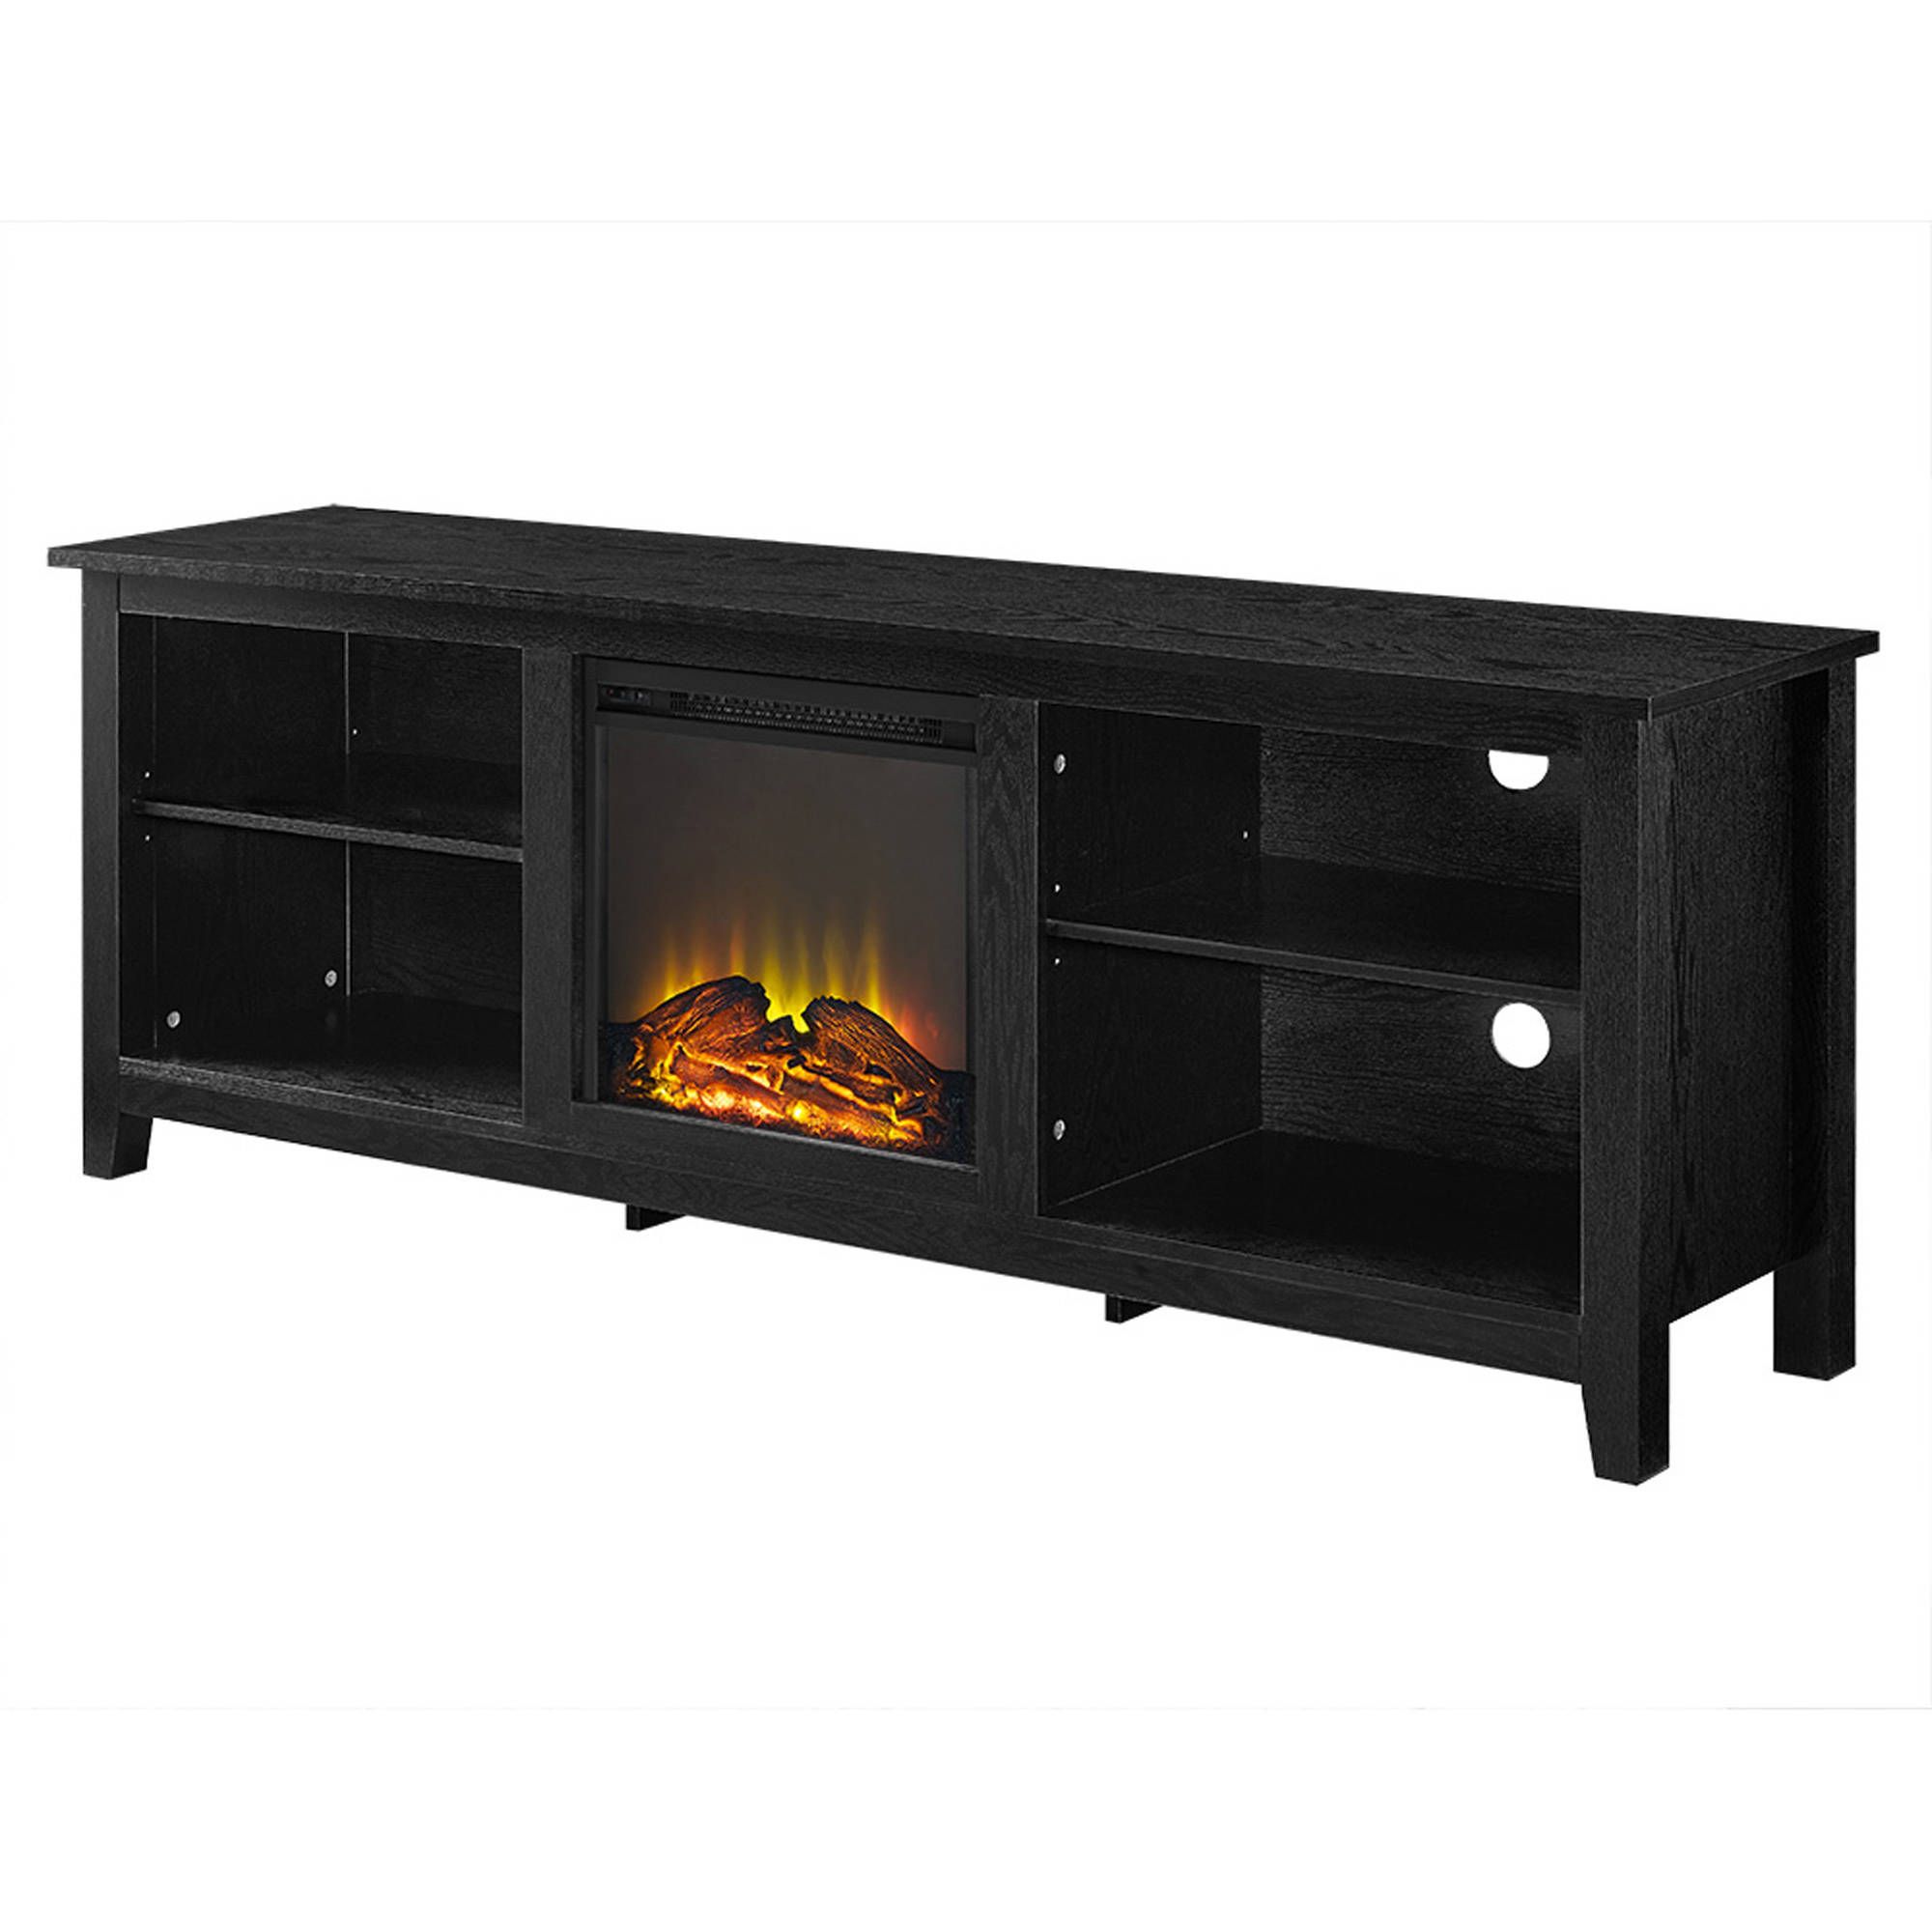 We Furniture Az70fp18bl 70" Wood Fireplace Tv Stand Black (Photo 17 of 20)